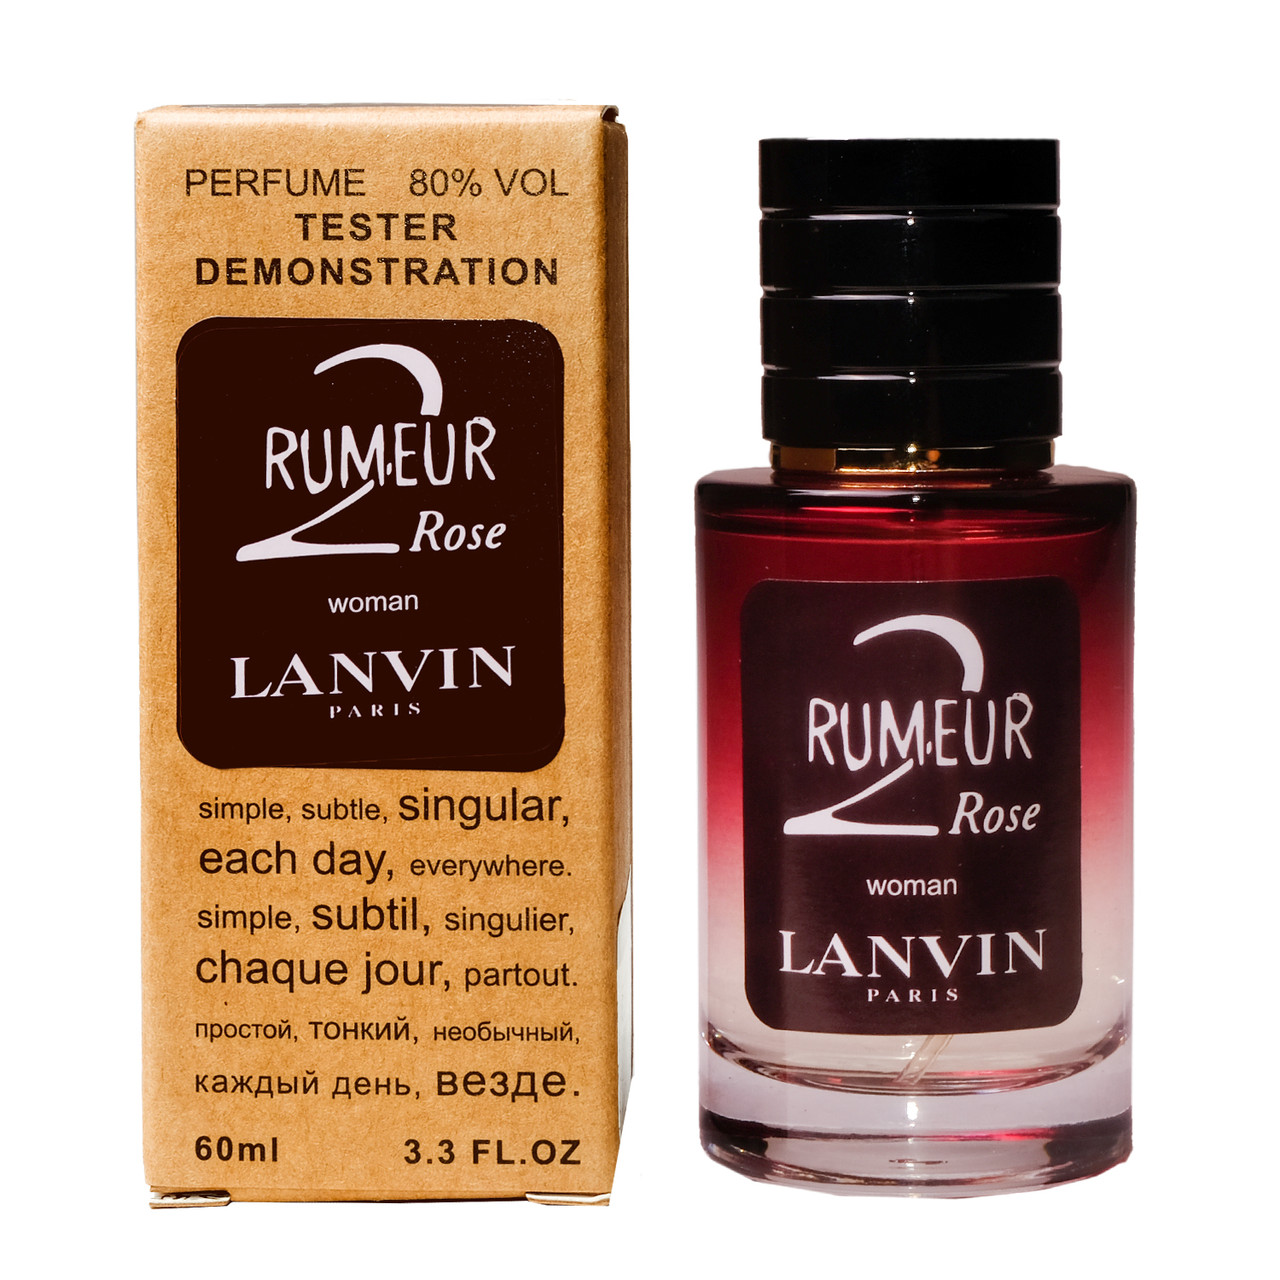 Lanvin Rumeur 2 Rose TESTER LUX, 60 мл